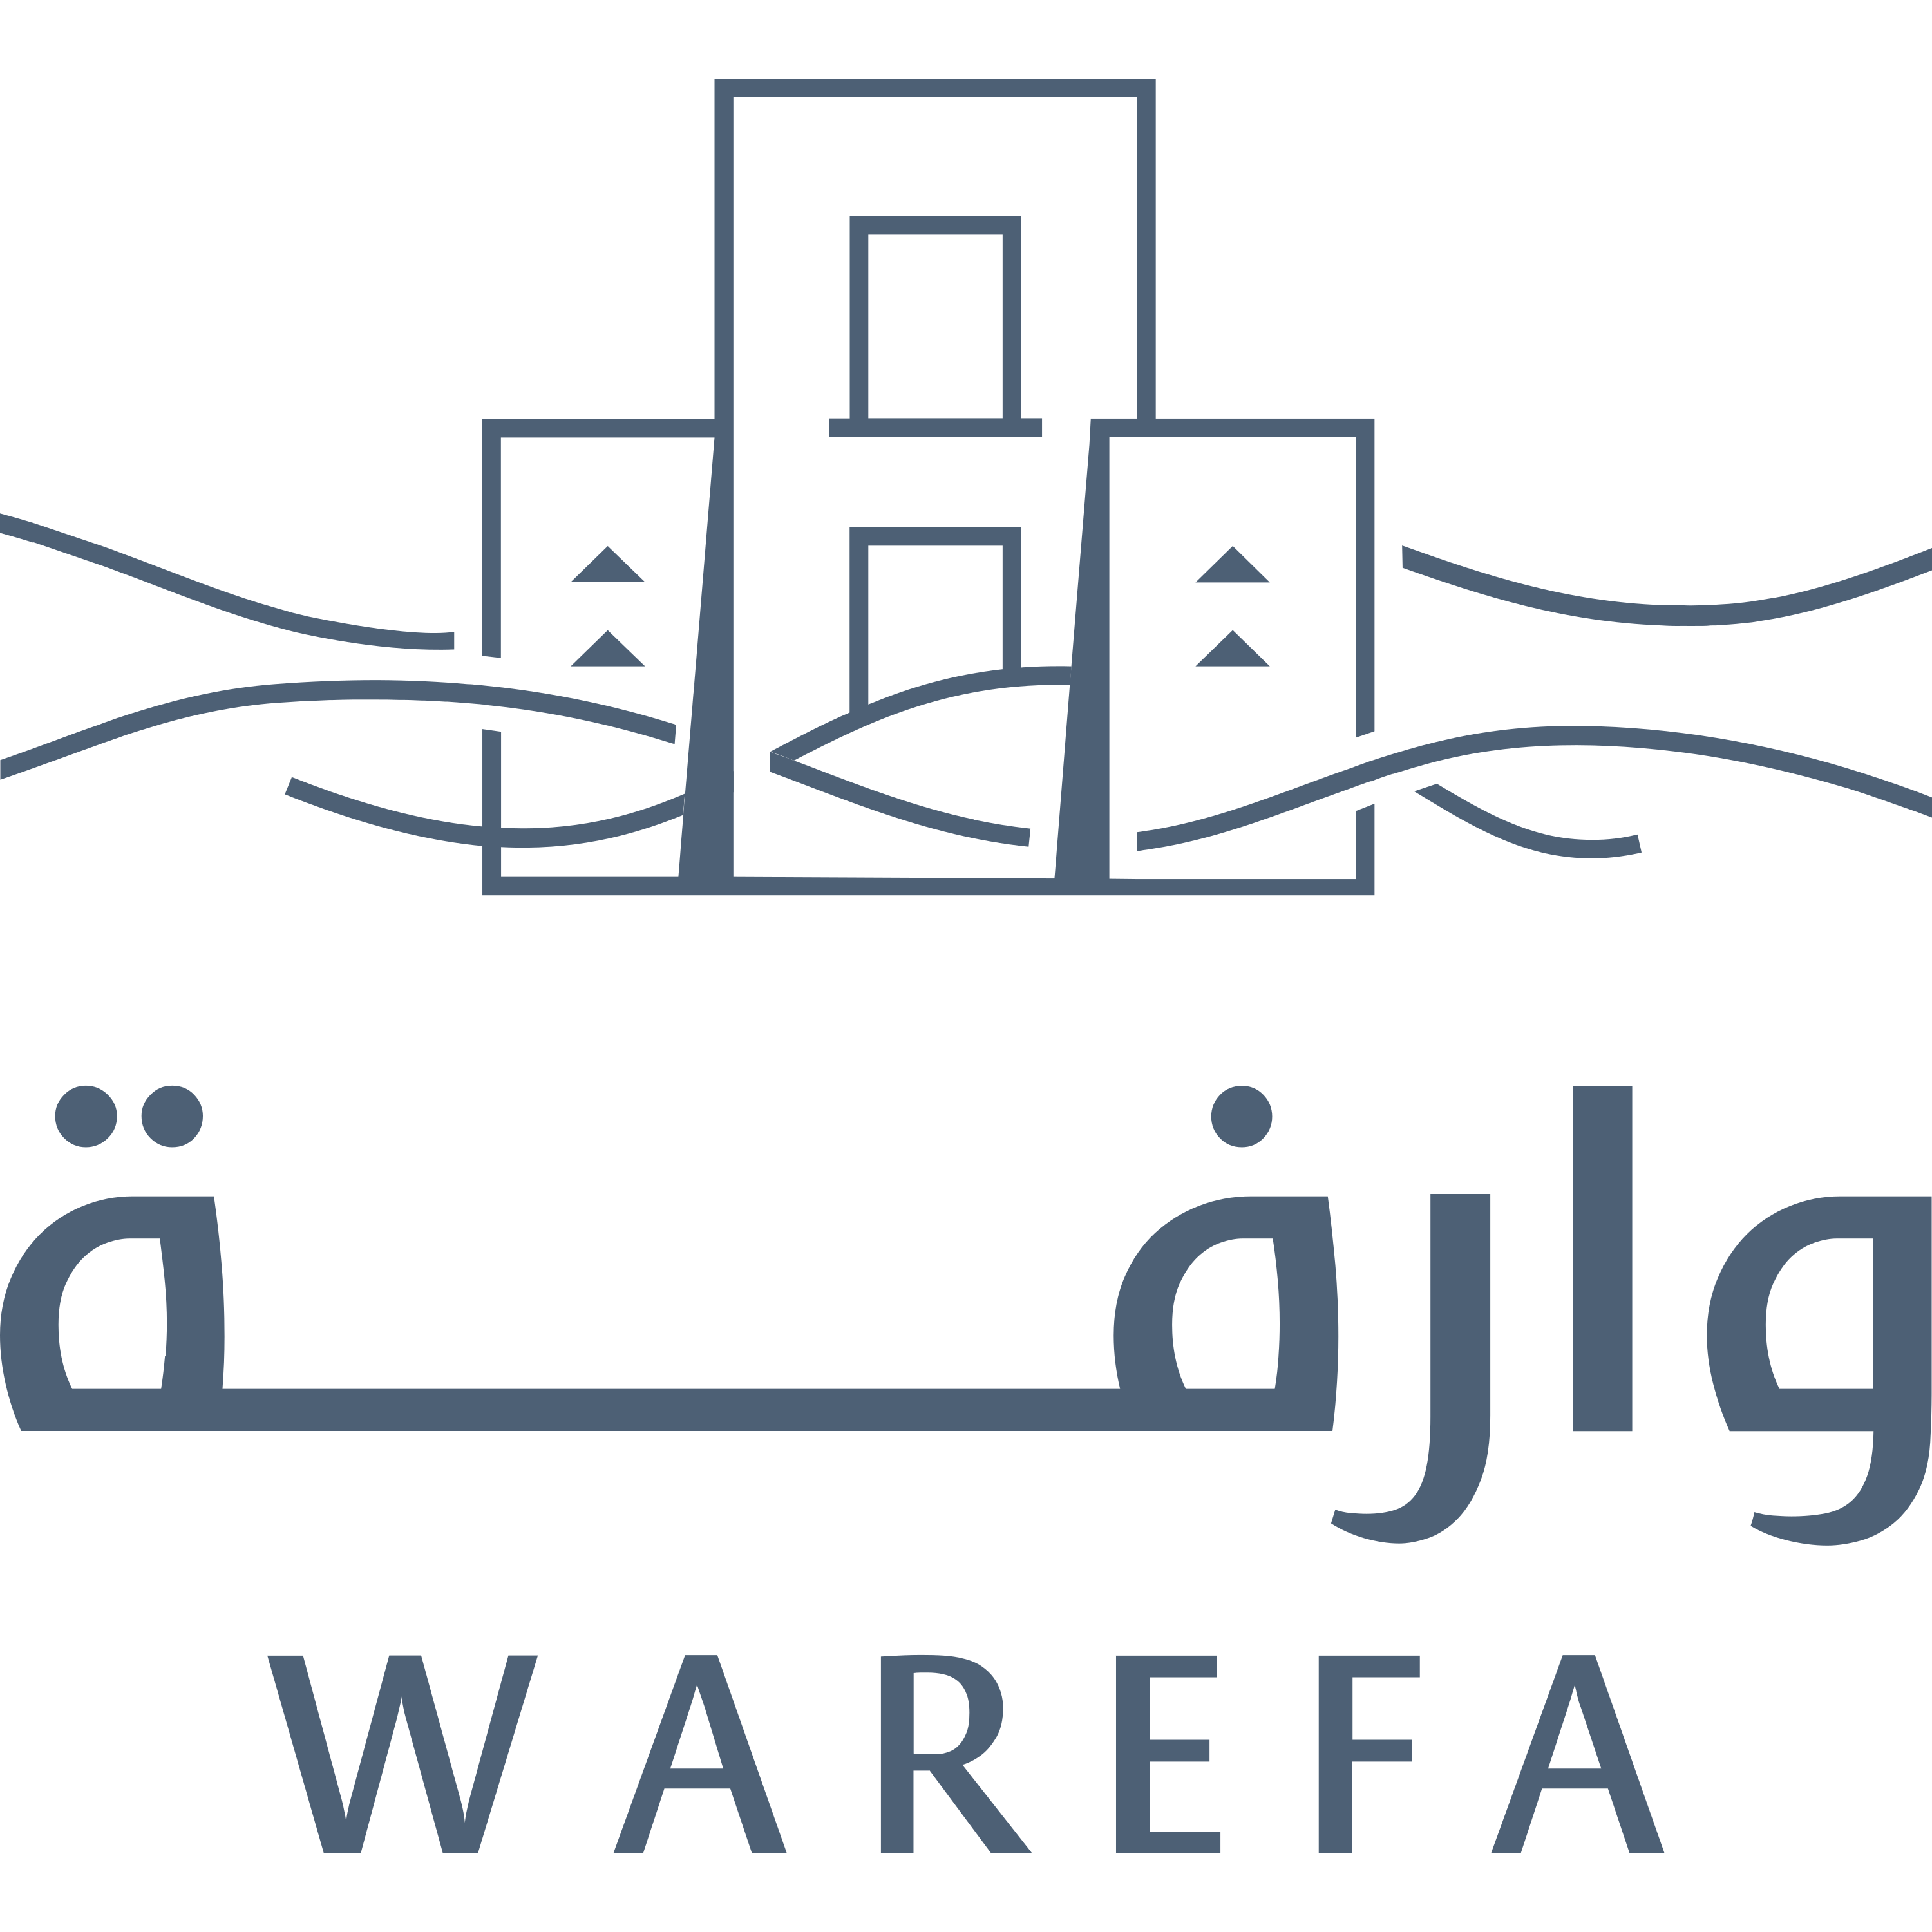 Warefa Logo  Transparent Image